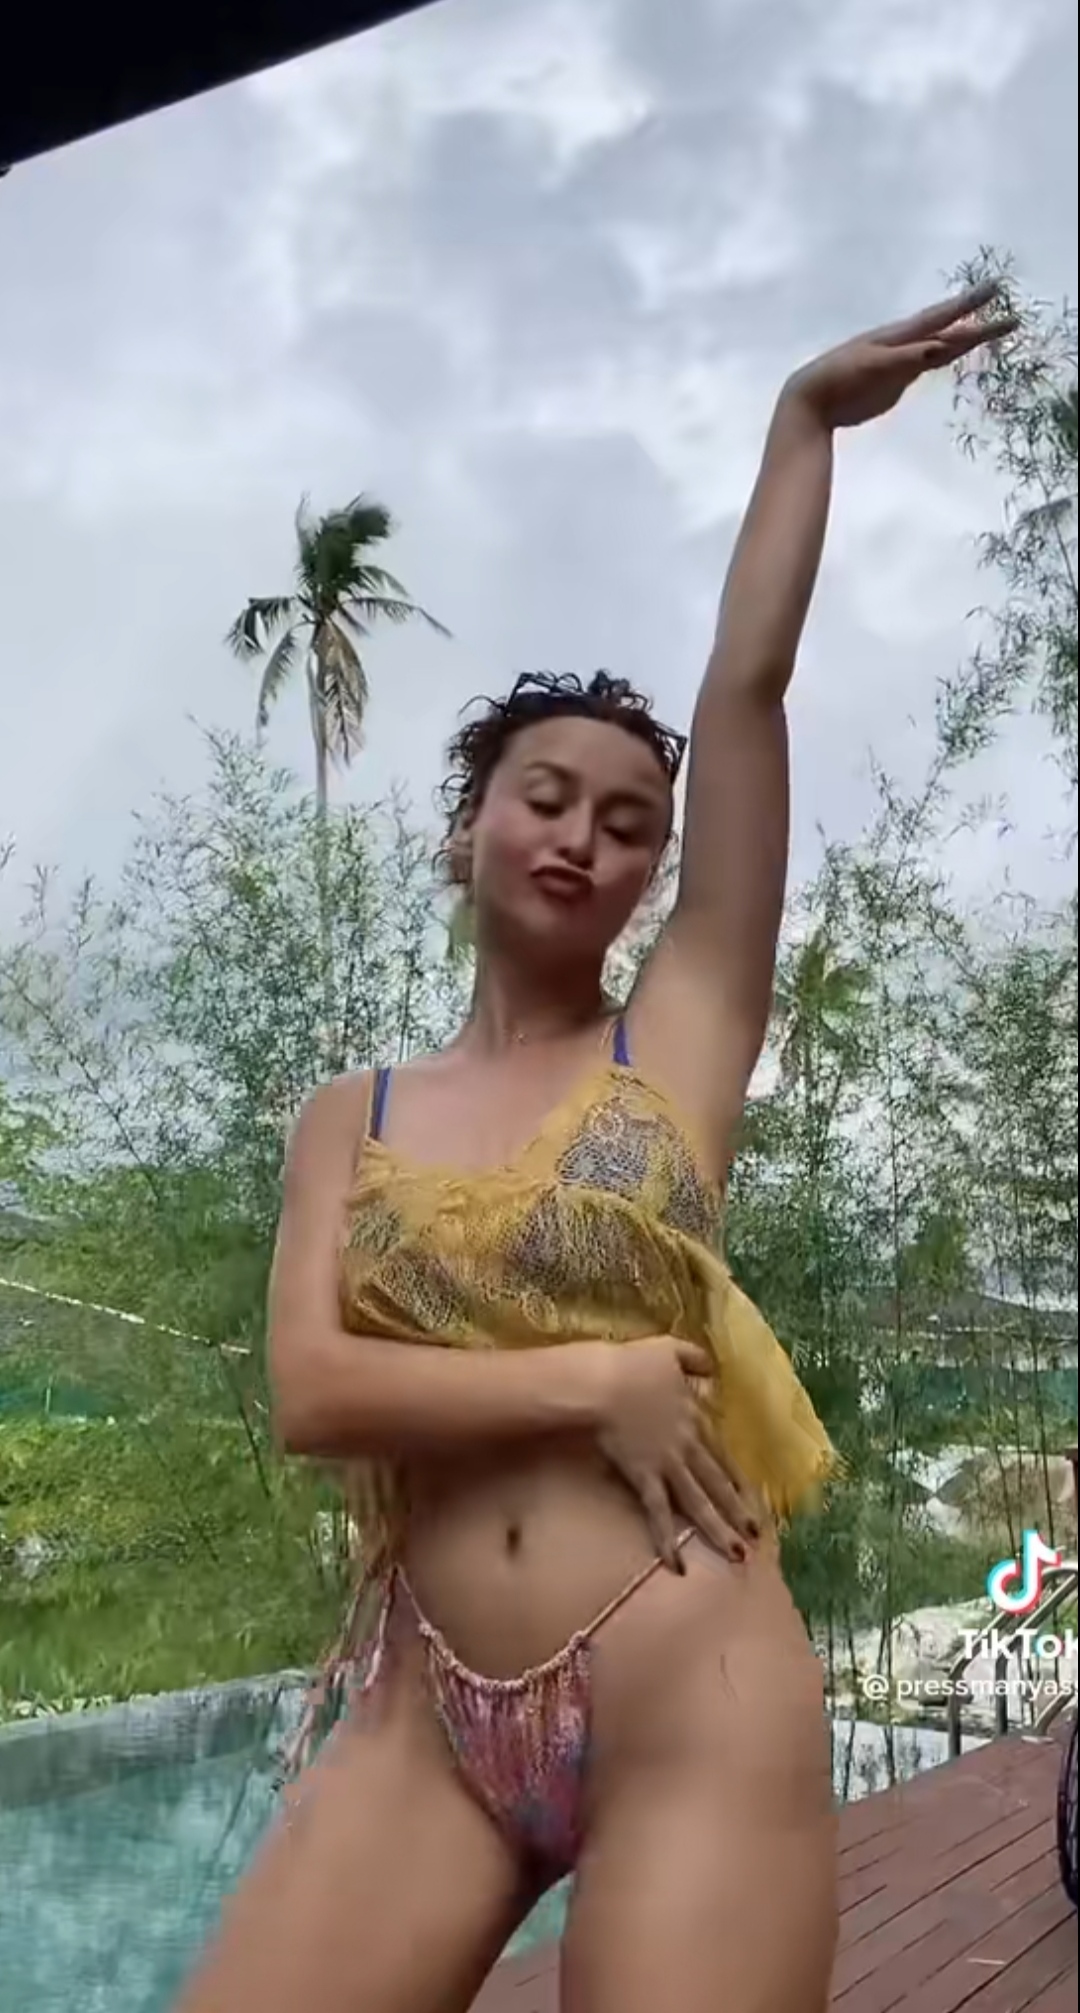 Yassi on viral bikini video: At least I didn’t take my clothes off